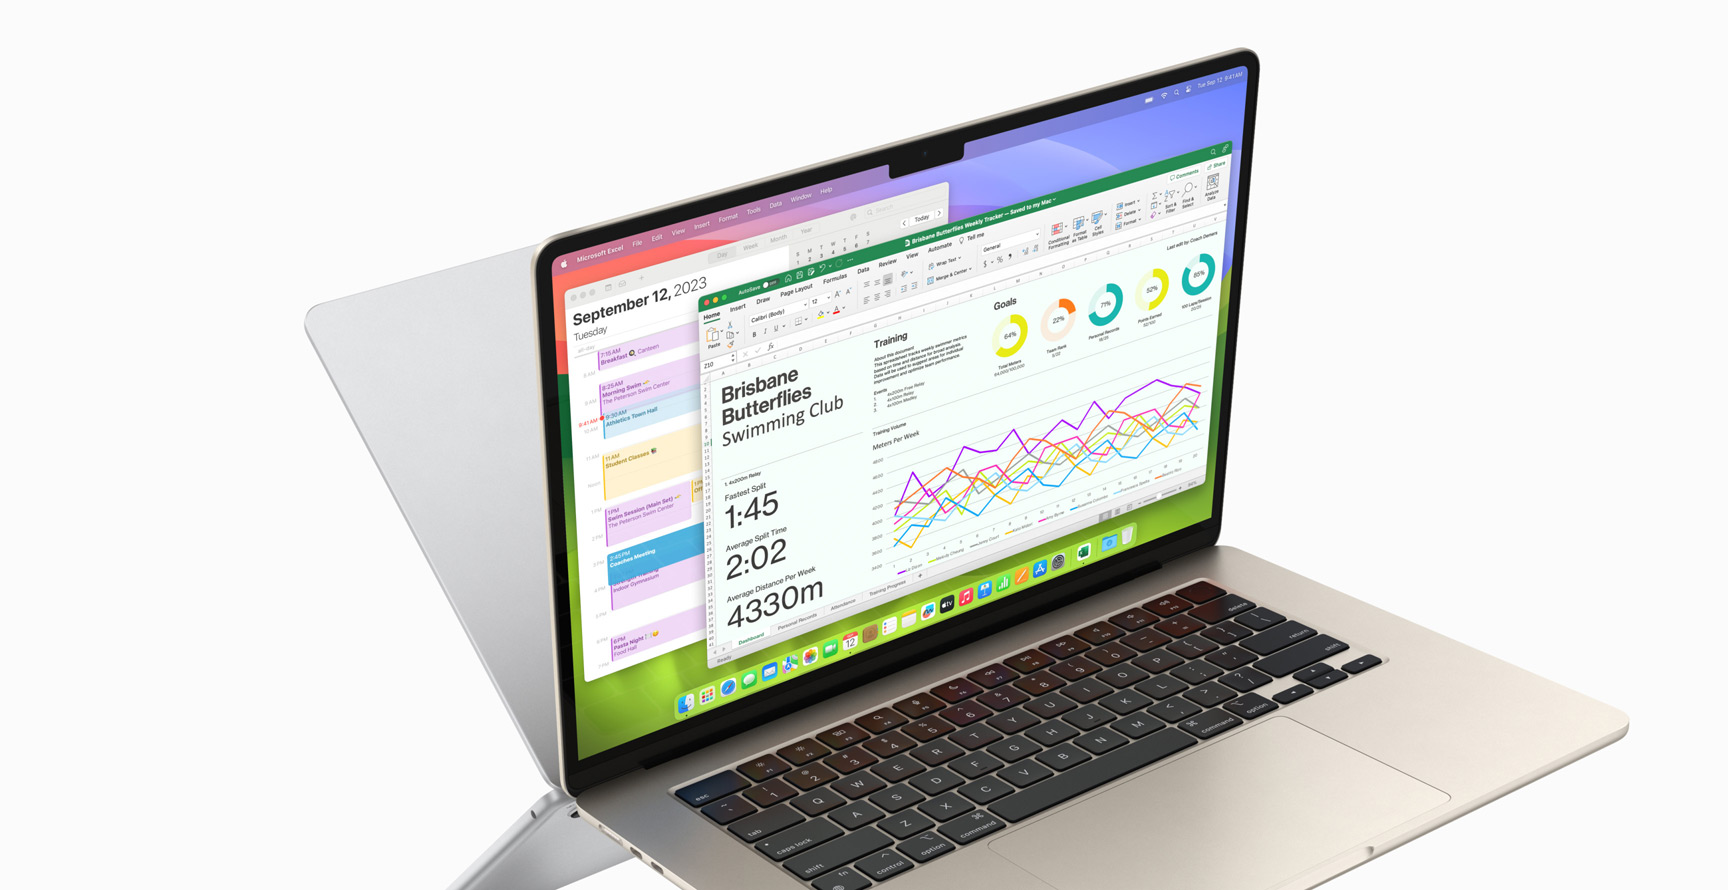 Calendar and Microsoft Excel being used on MacBook Air.